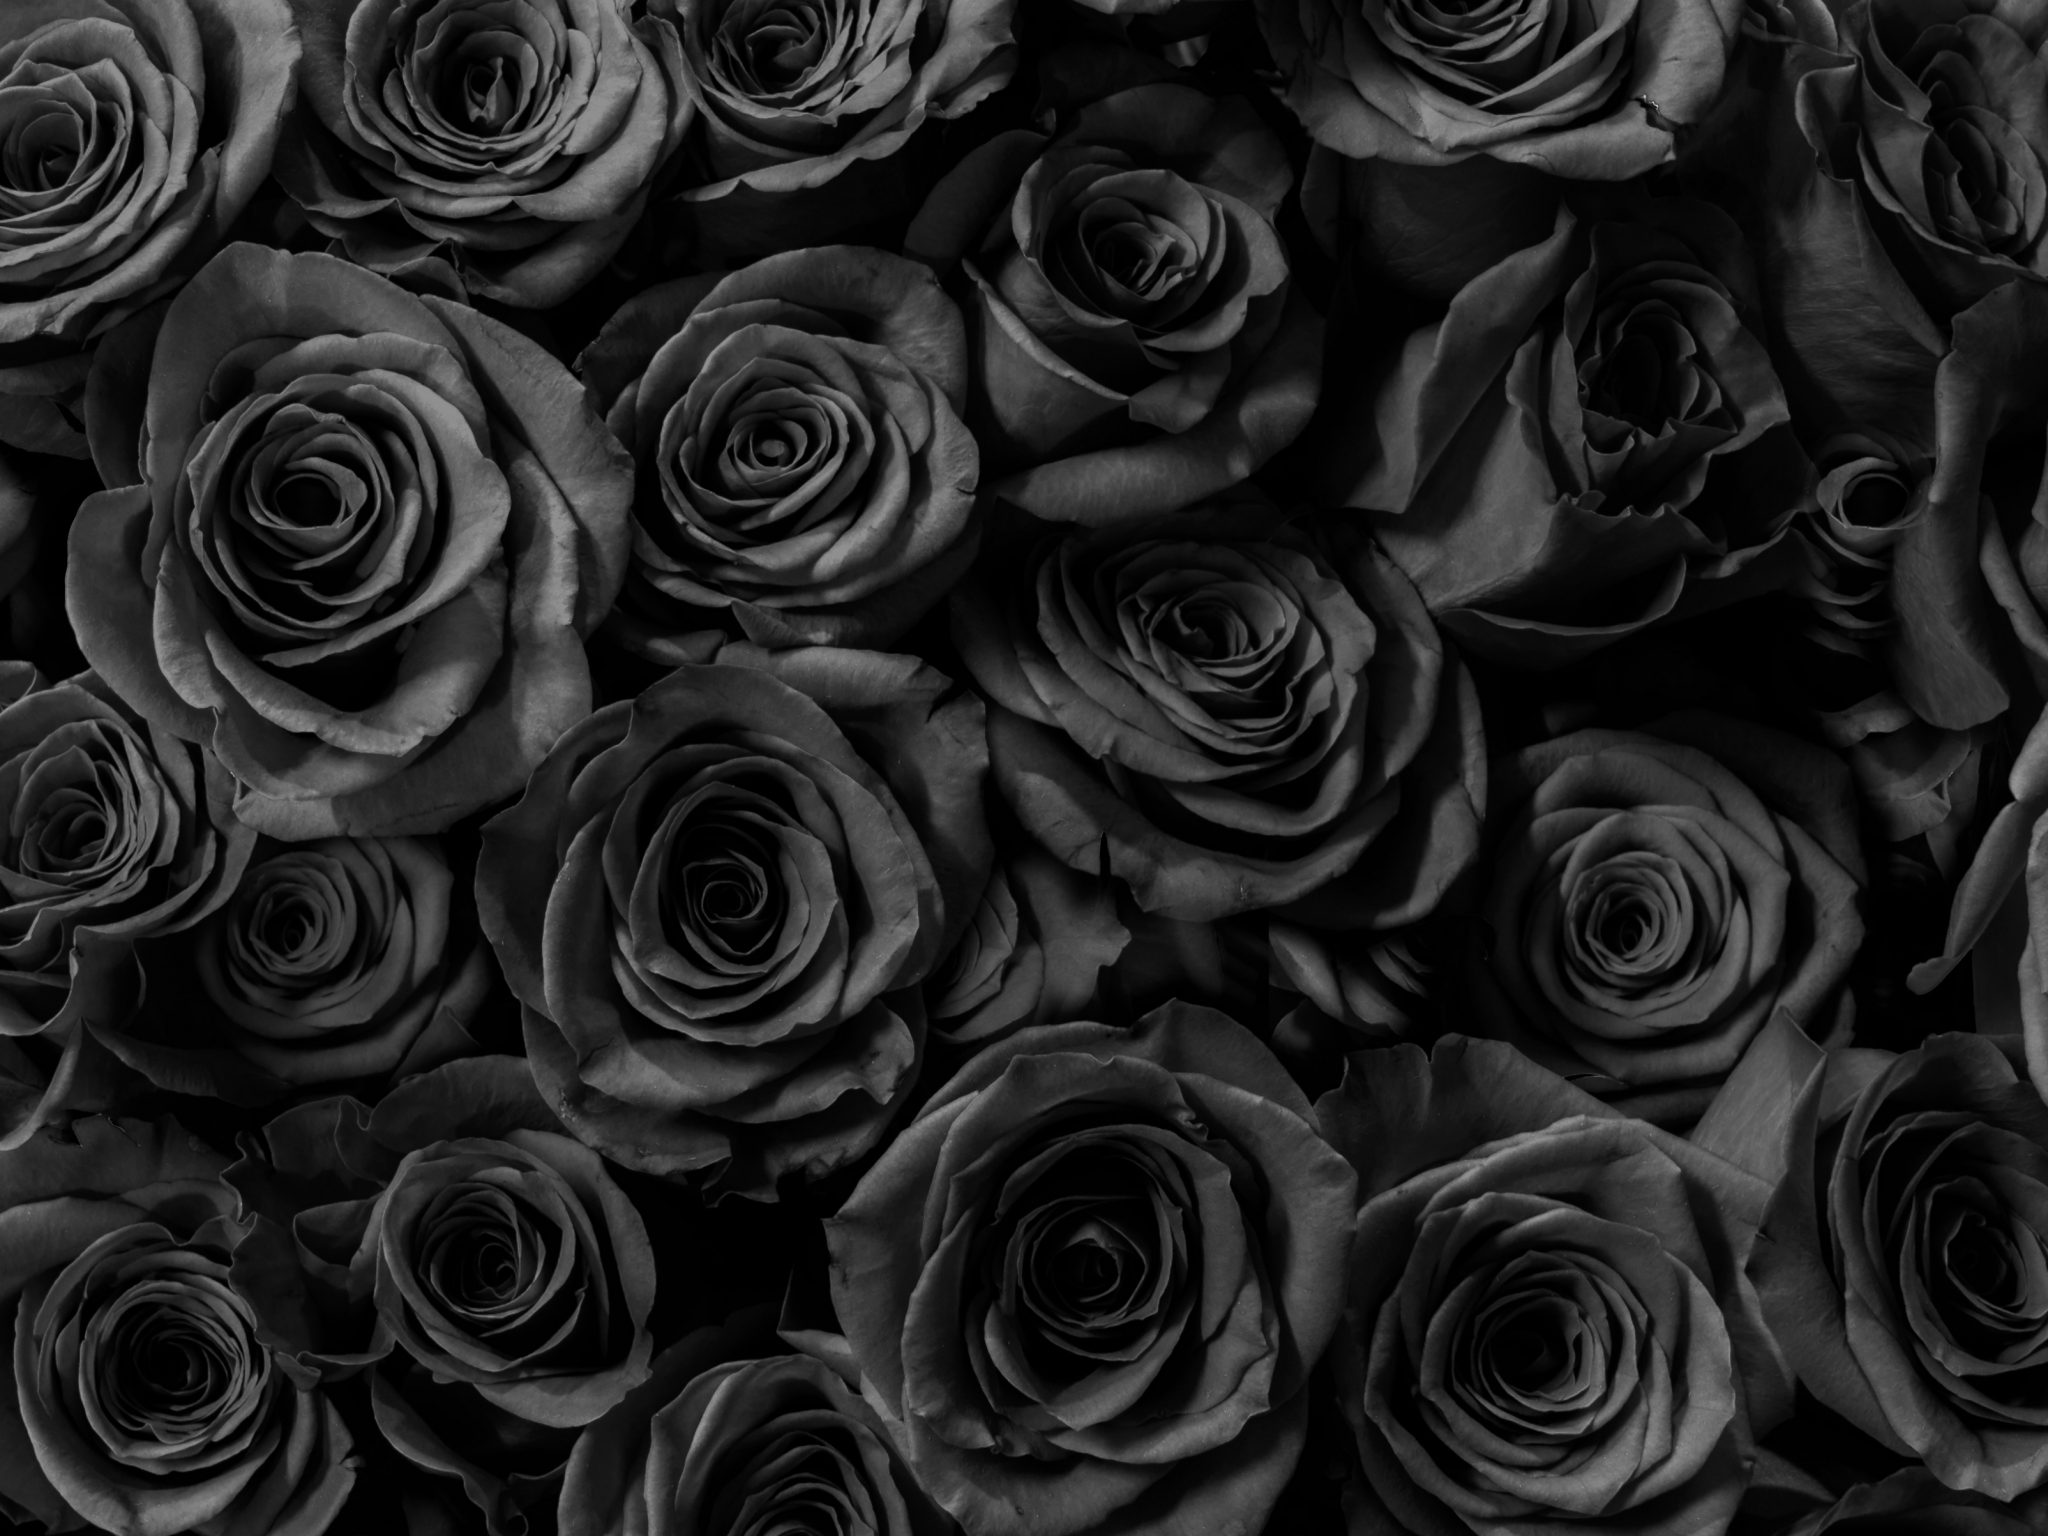 2048x1536 wallpaper Black Roses Gift Anniversary iPad Wallpaper 2048x1536 pixels resolution